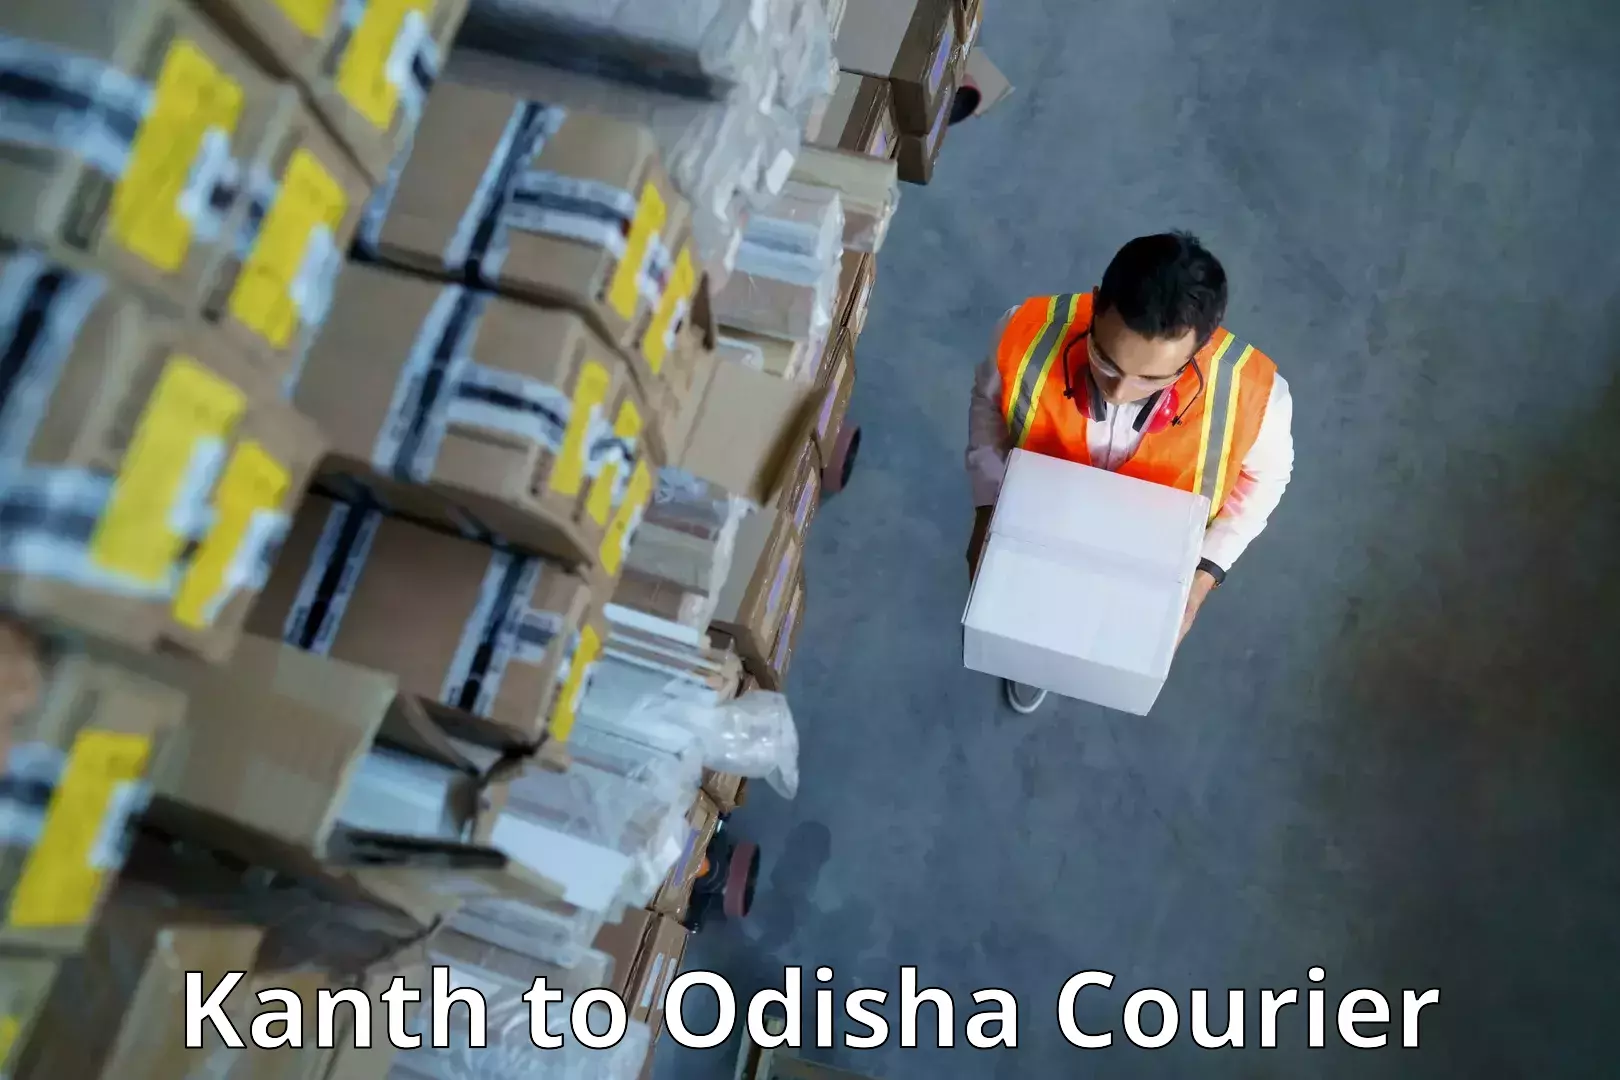 Global logistics network Kanth to Odisha